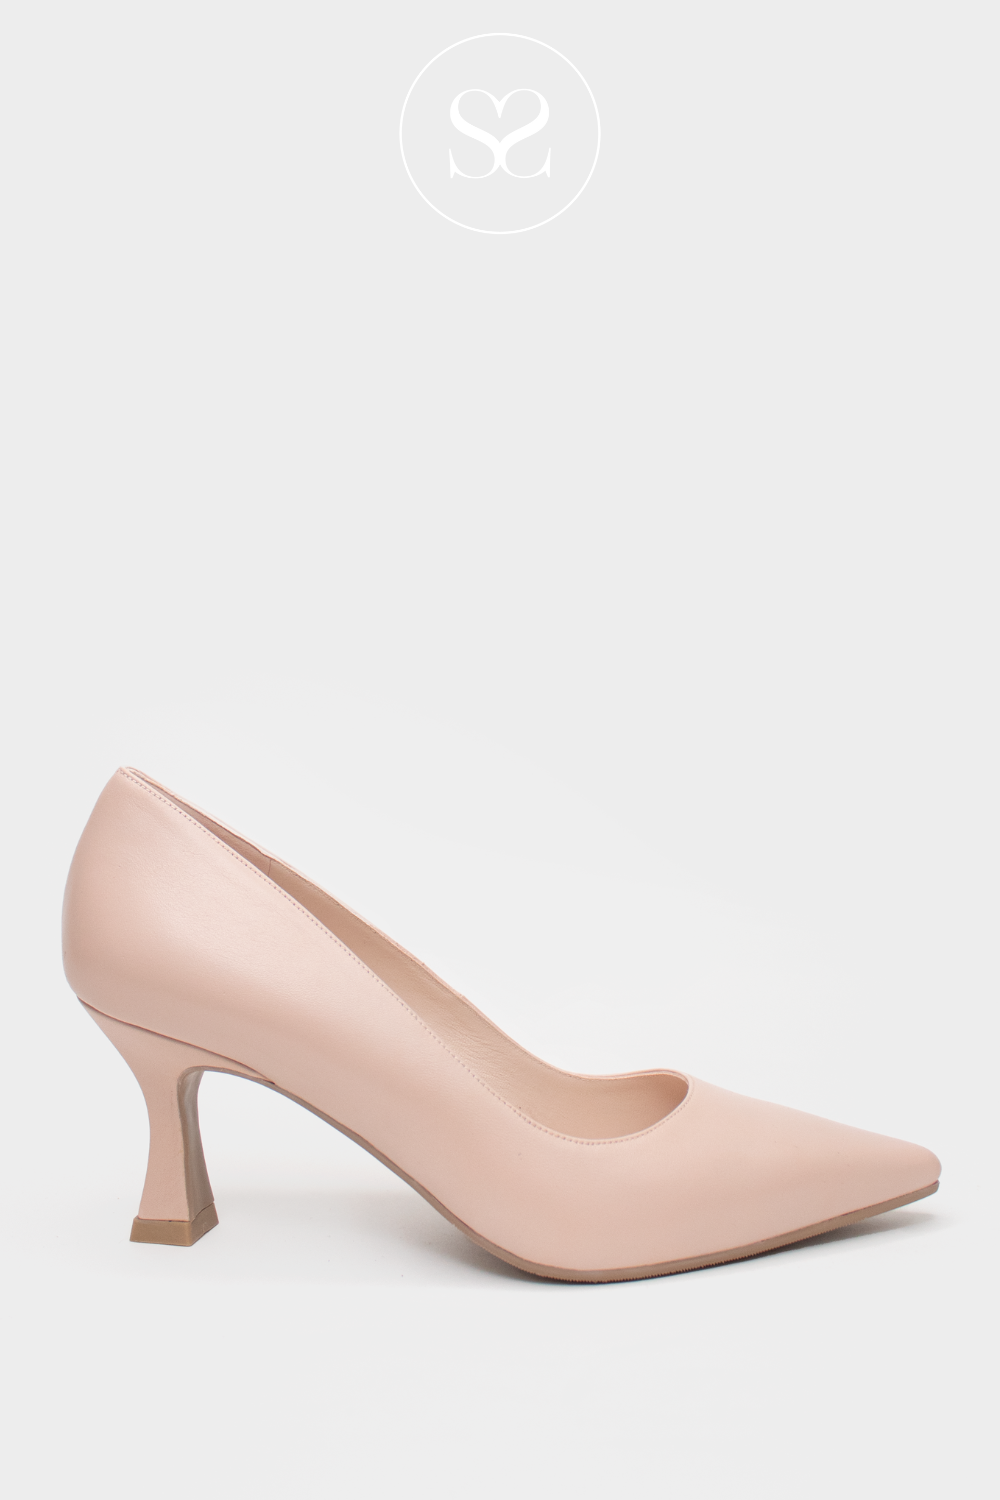 Low Heels ladies Party shoes - Grey / 10 | Party shoes, Low heels, Low heel  pumps